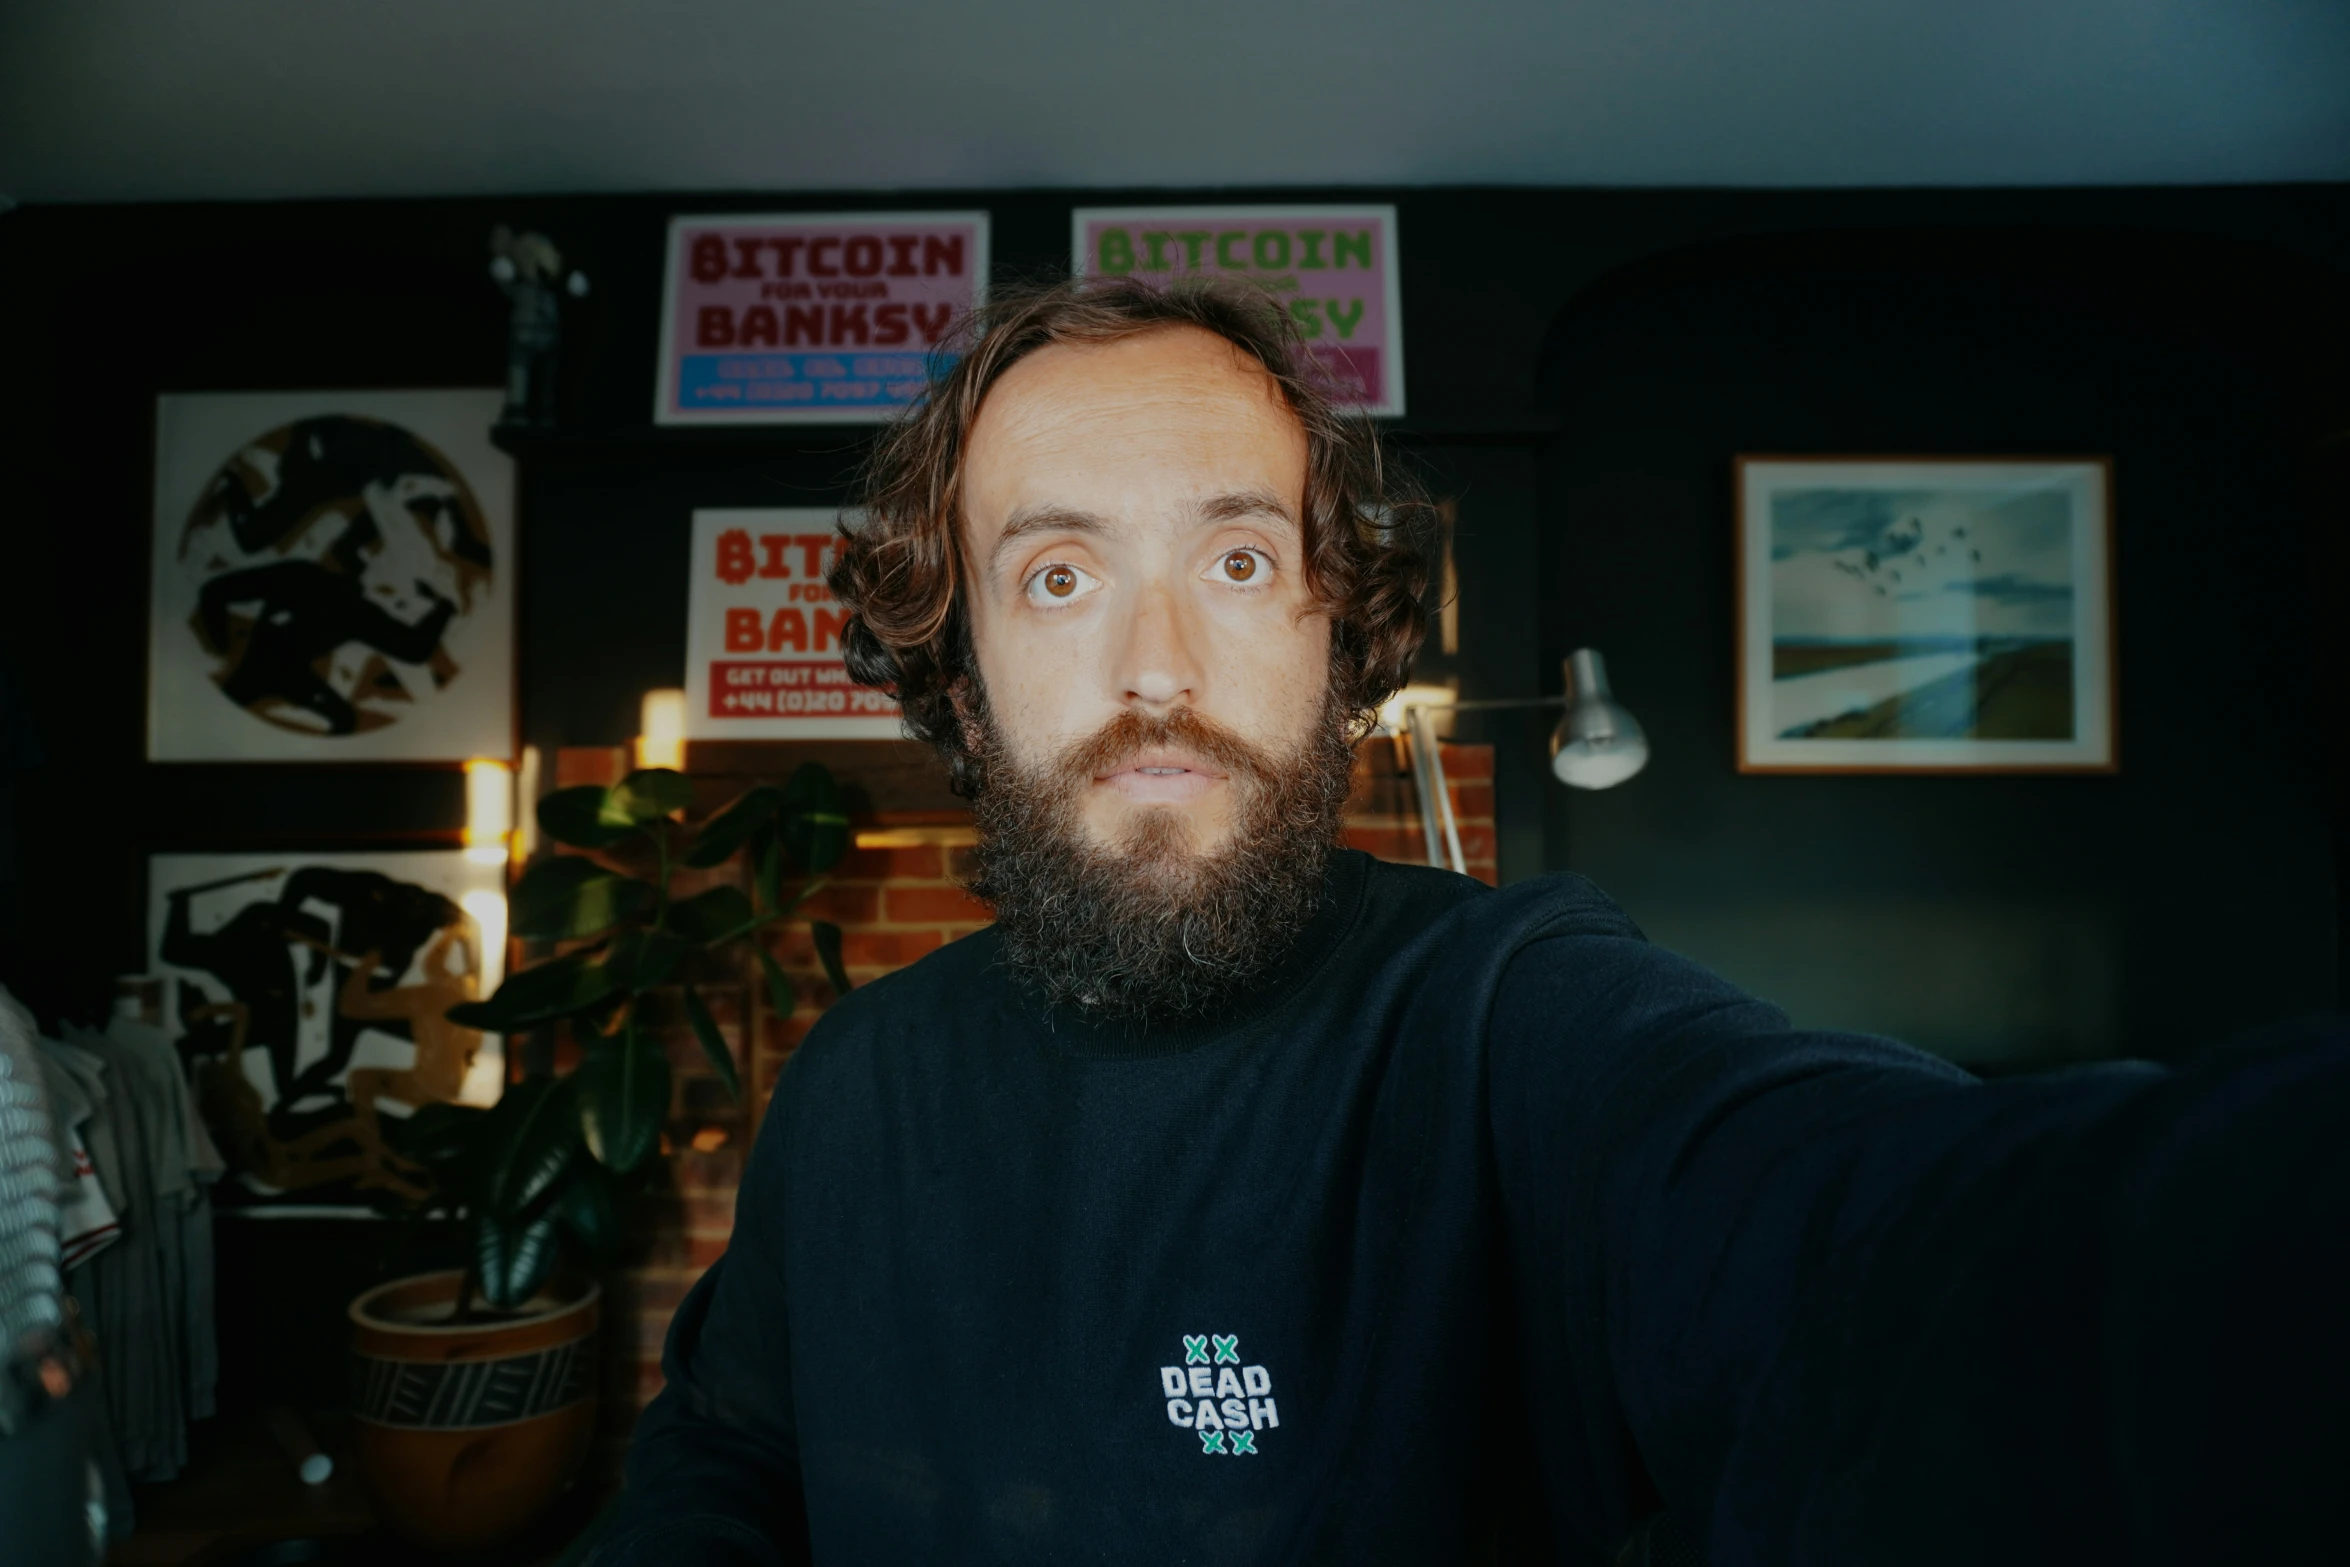 a man with a full beard and dark shirt taking a selfie